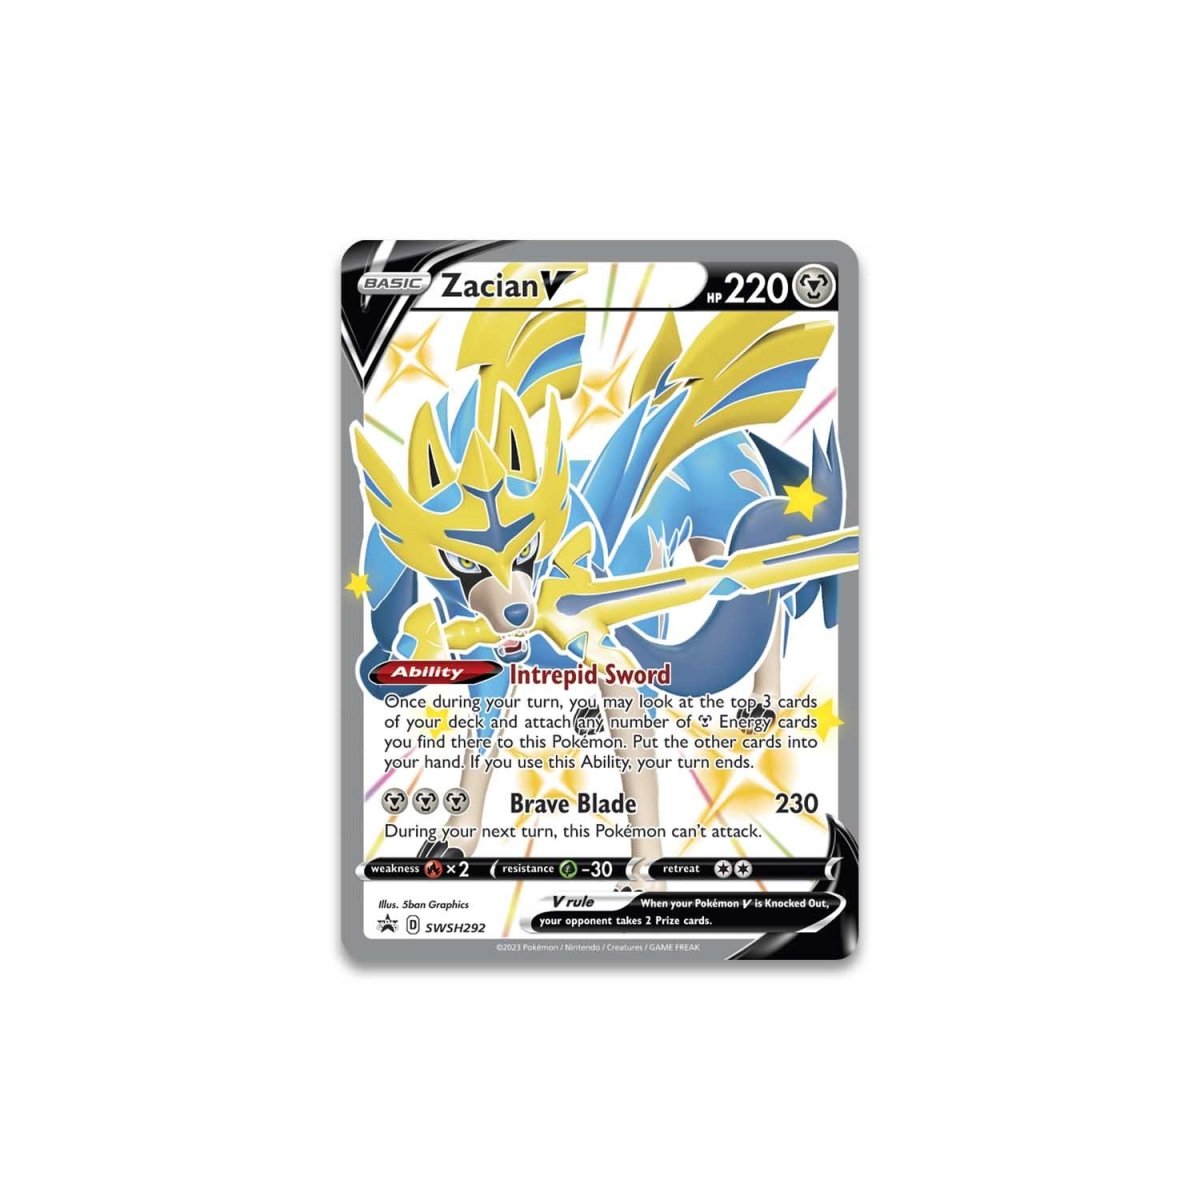 Pokemon Trading Card Game: Crown Zenith Premium Figure Collection - Shiny  Zacian : Target